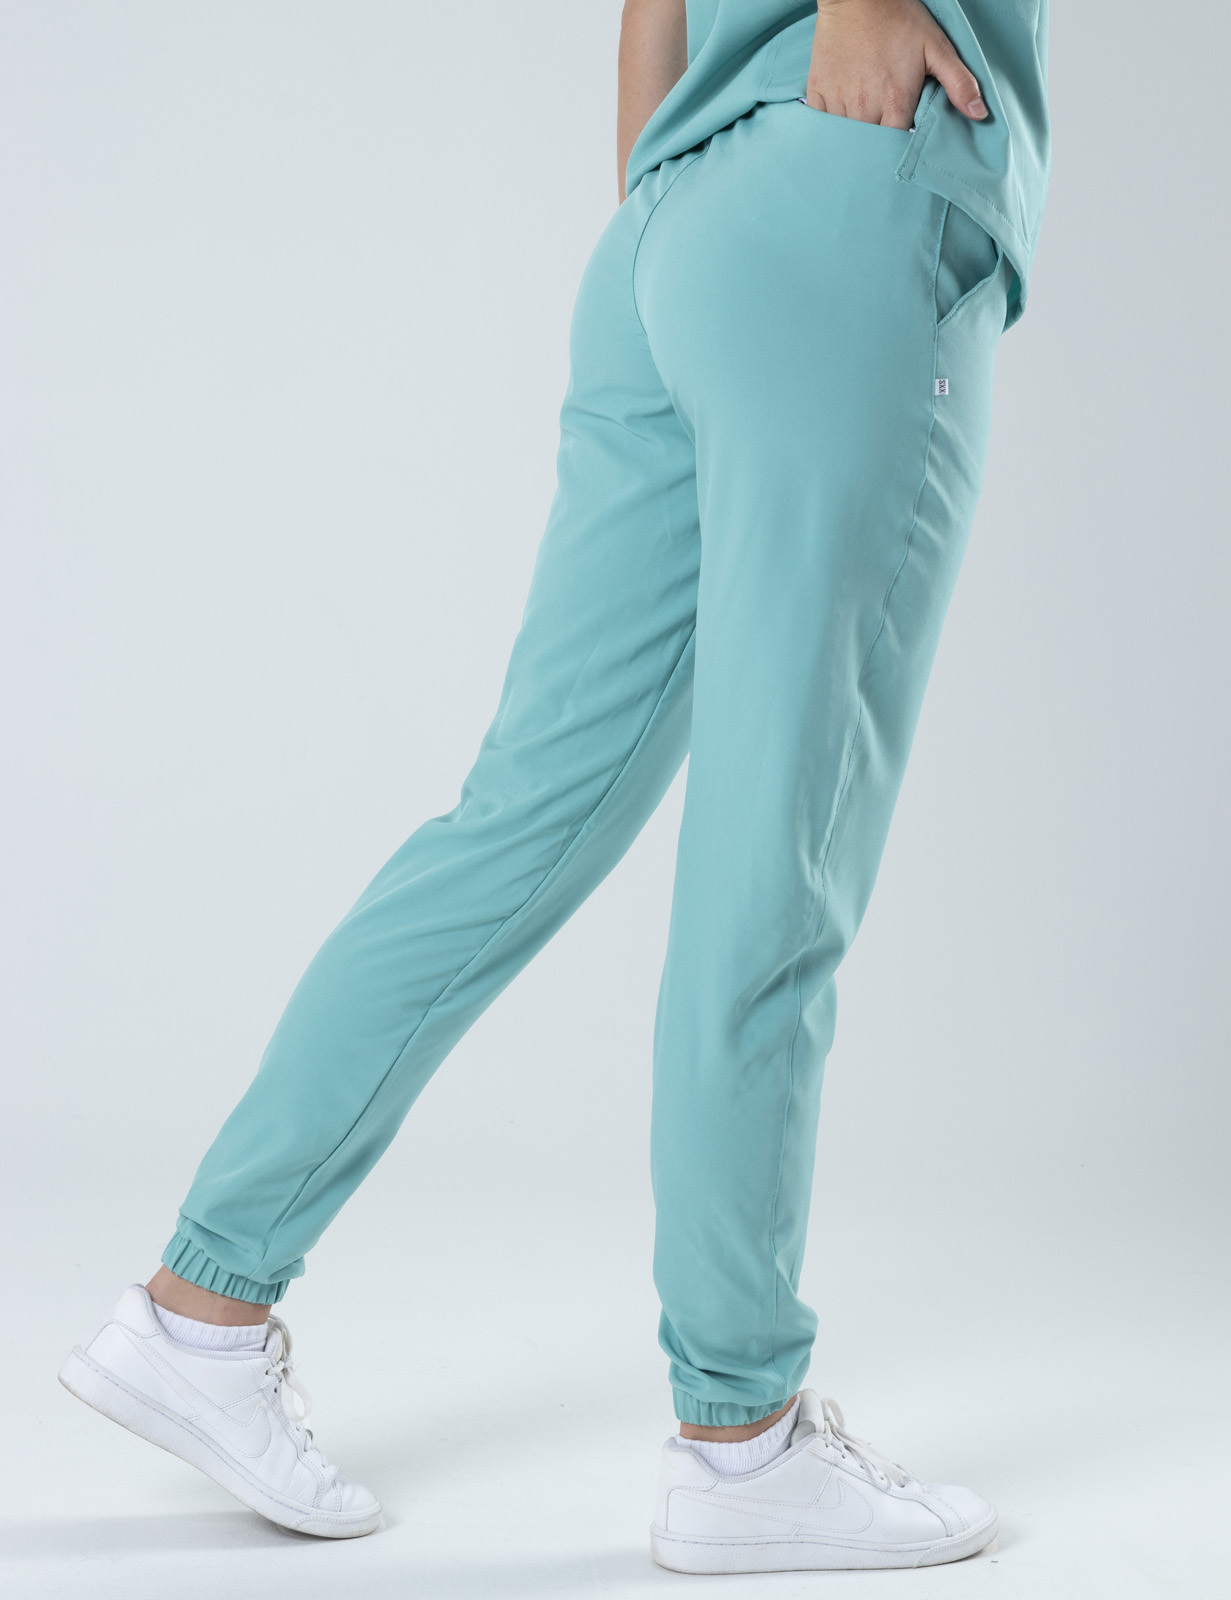 Anon Women's Jogger Pants (Poly/Spandex) - Cool Mint